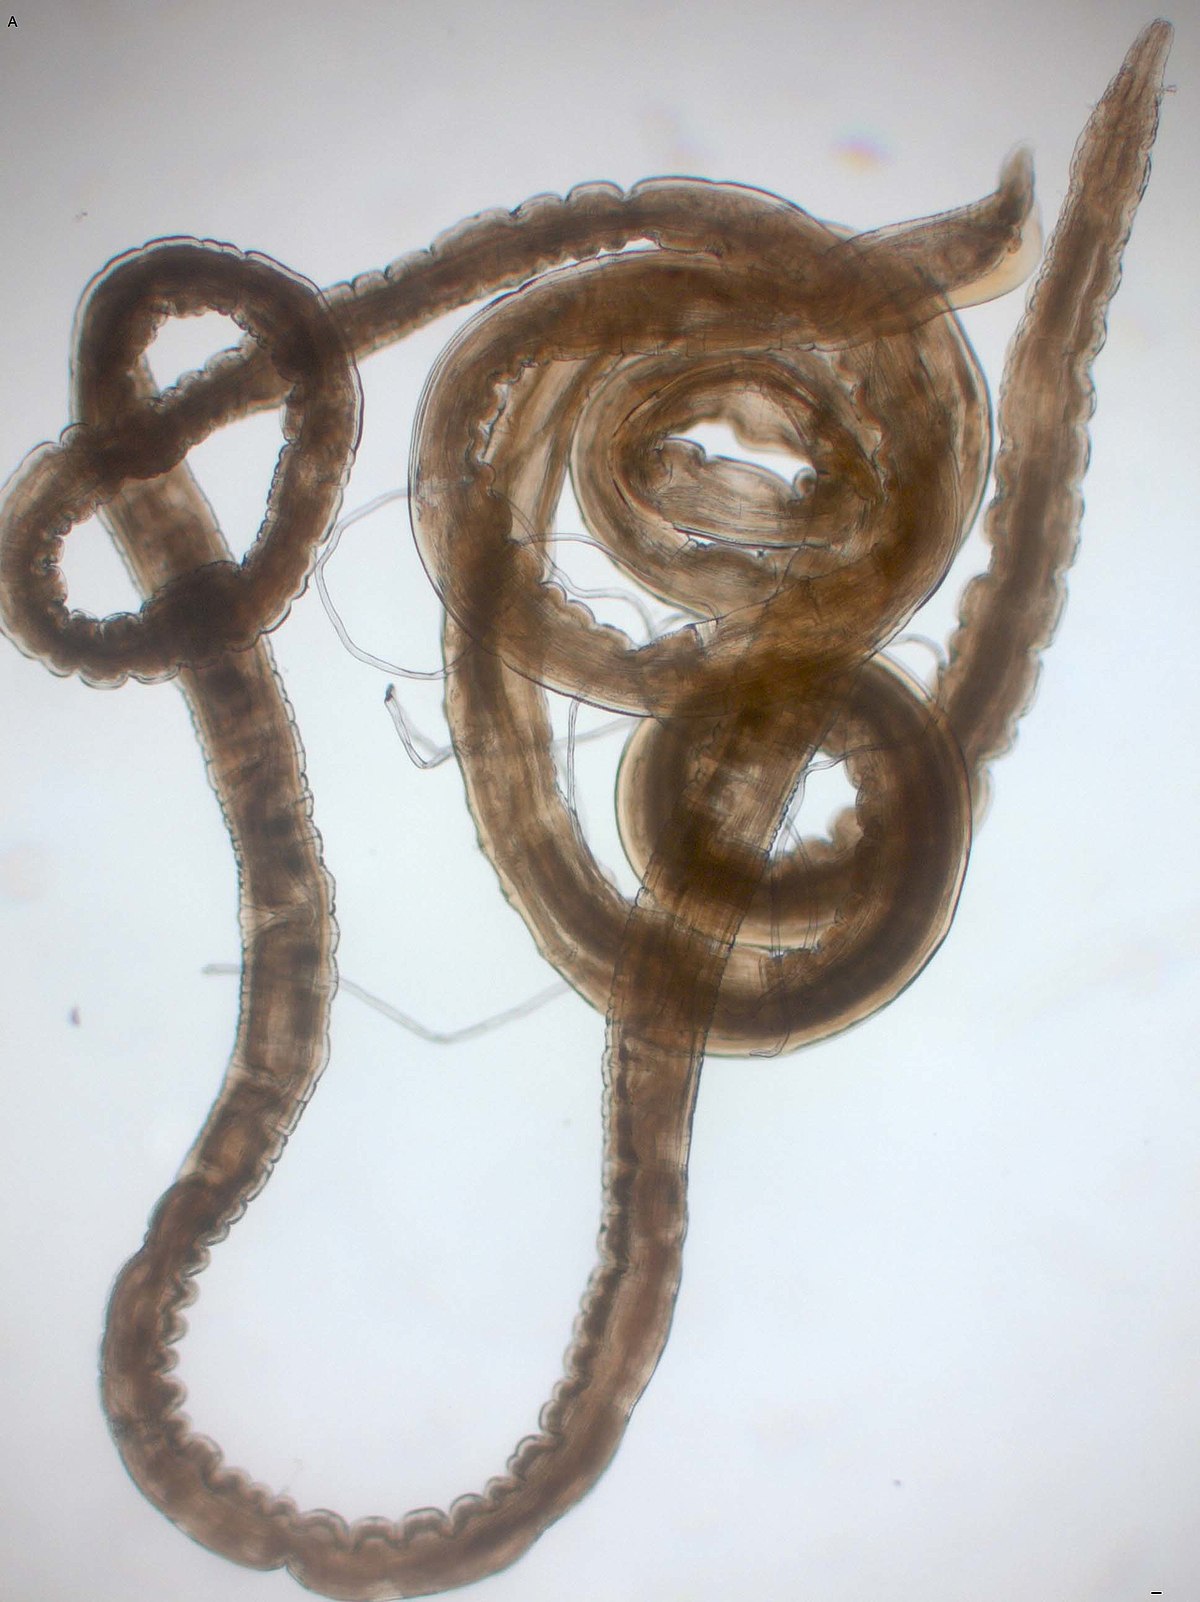 microscopic intestinal parasites in humans